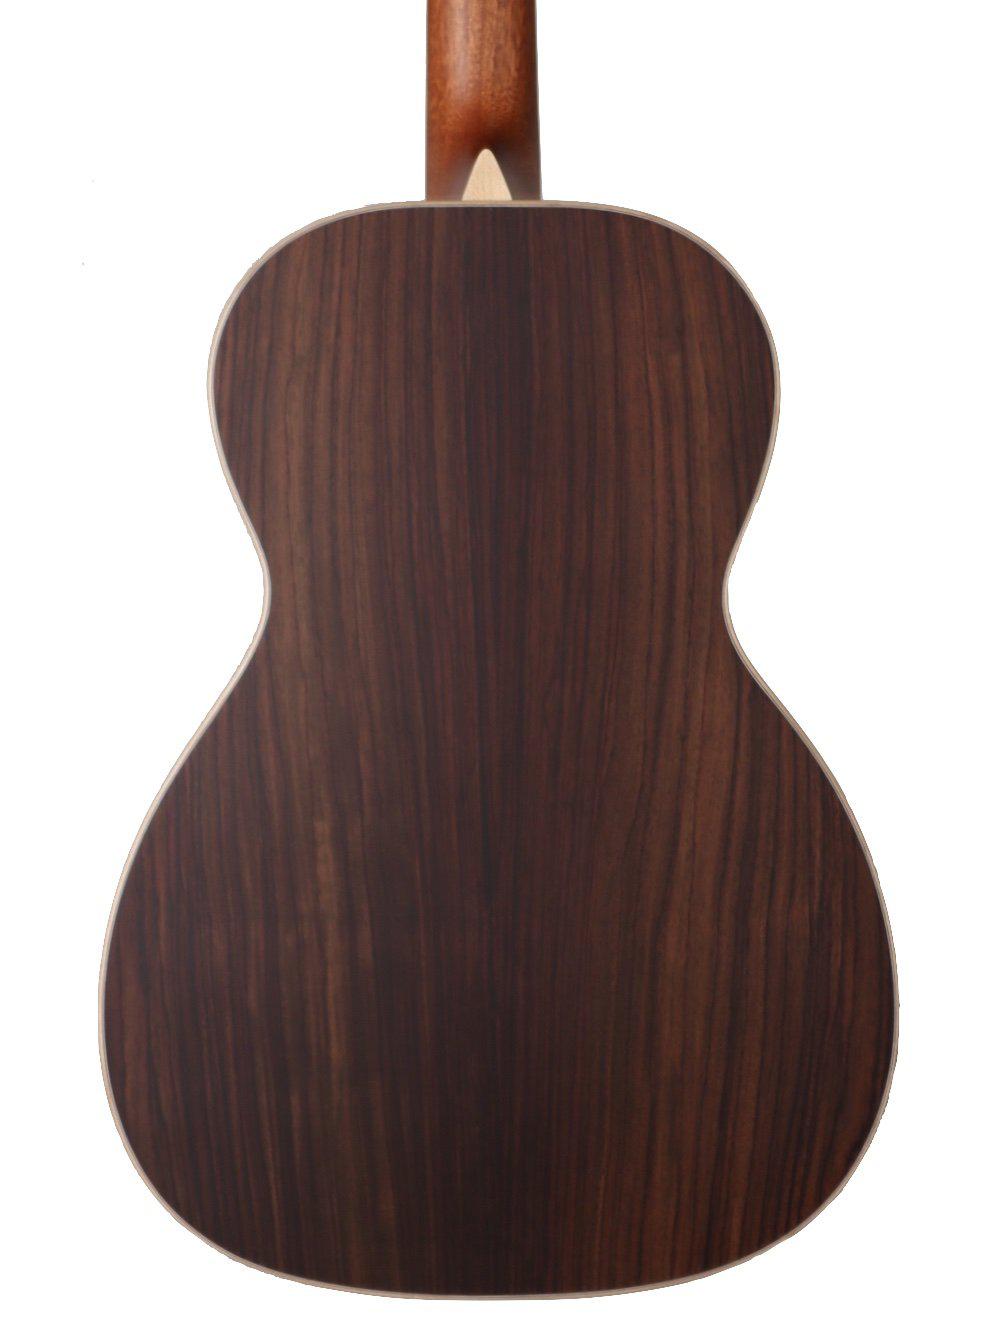 Larrivee 00-03 Sitka / Indian Rosewood #133221 - Larrivee Guitars - Heartbreaker Guitars